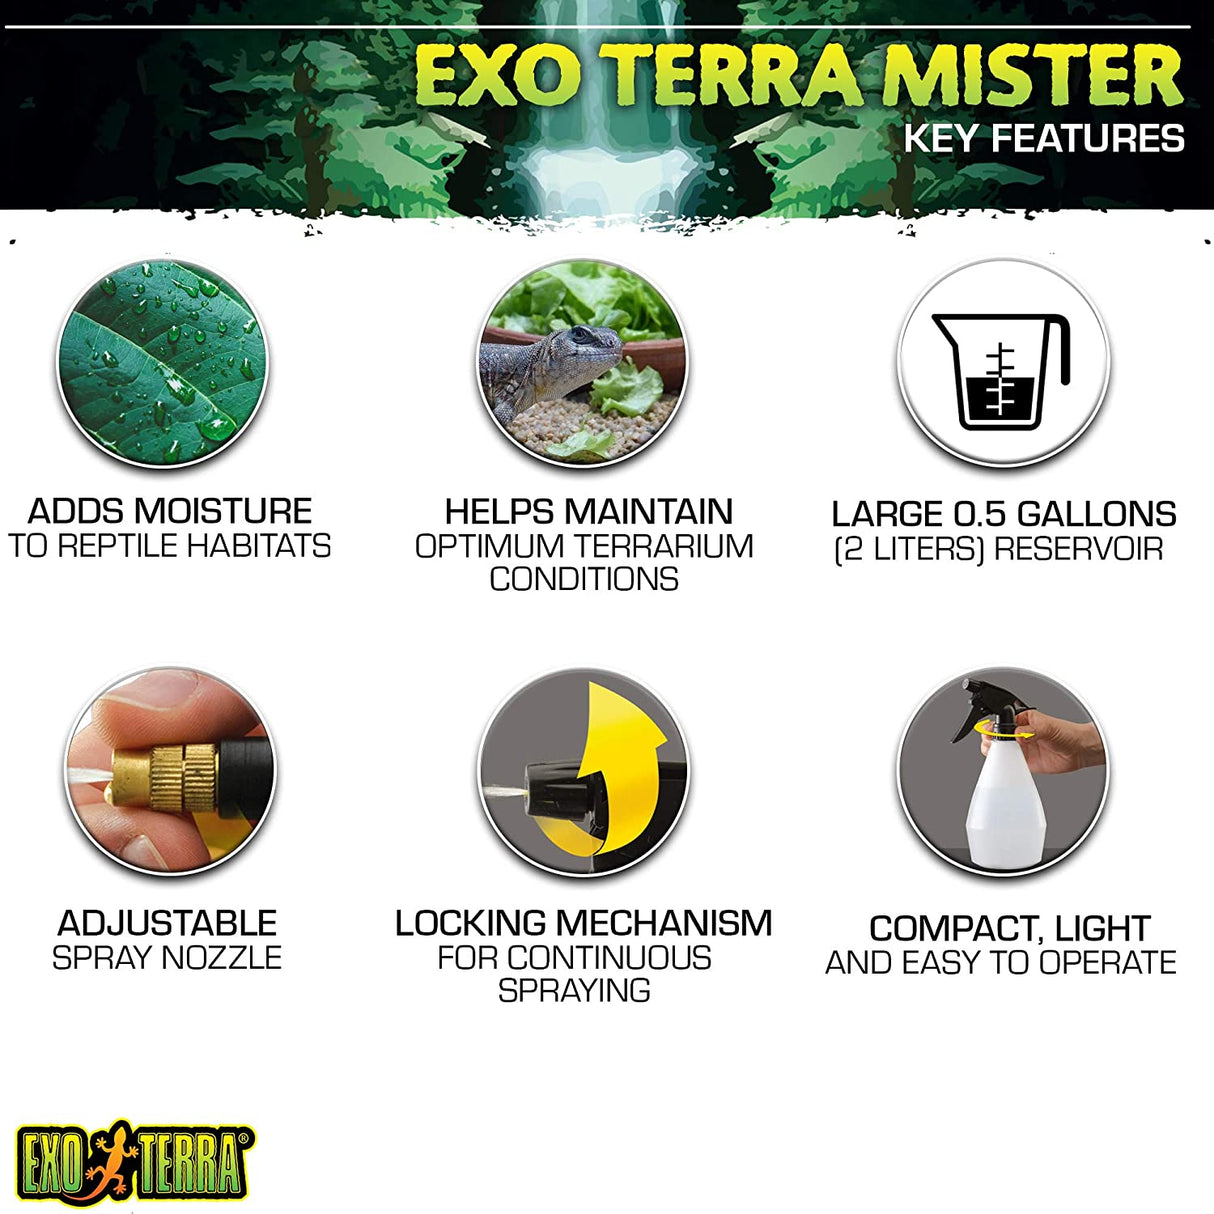 Exo Terra Mister Portable Pressure Sprayer - PetMountain.com